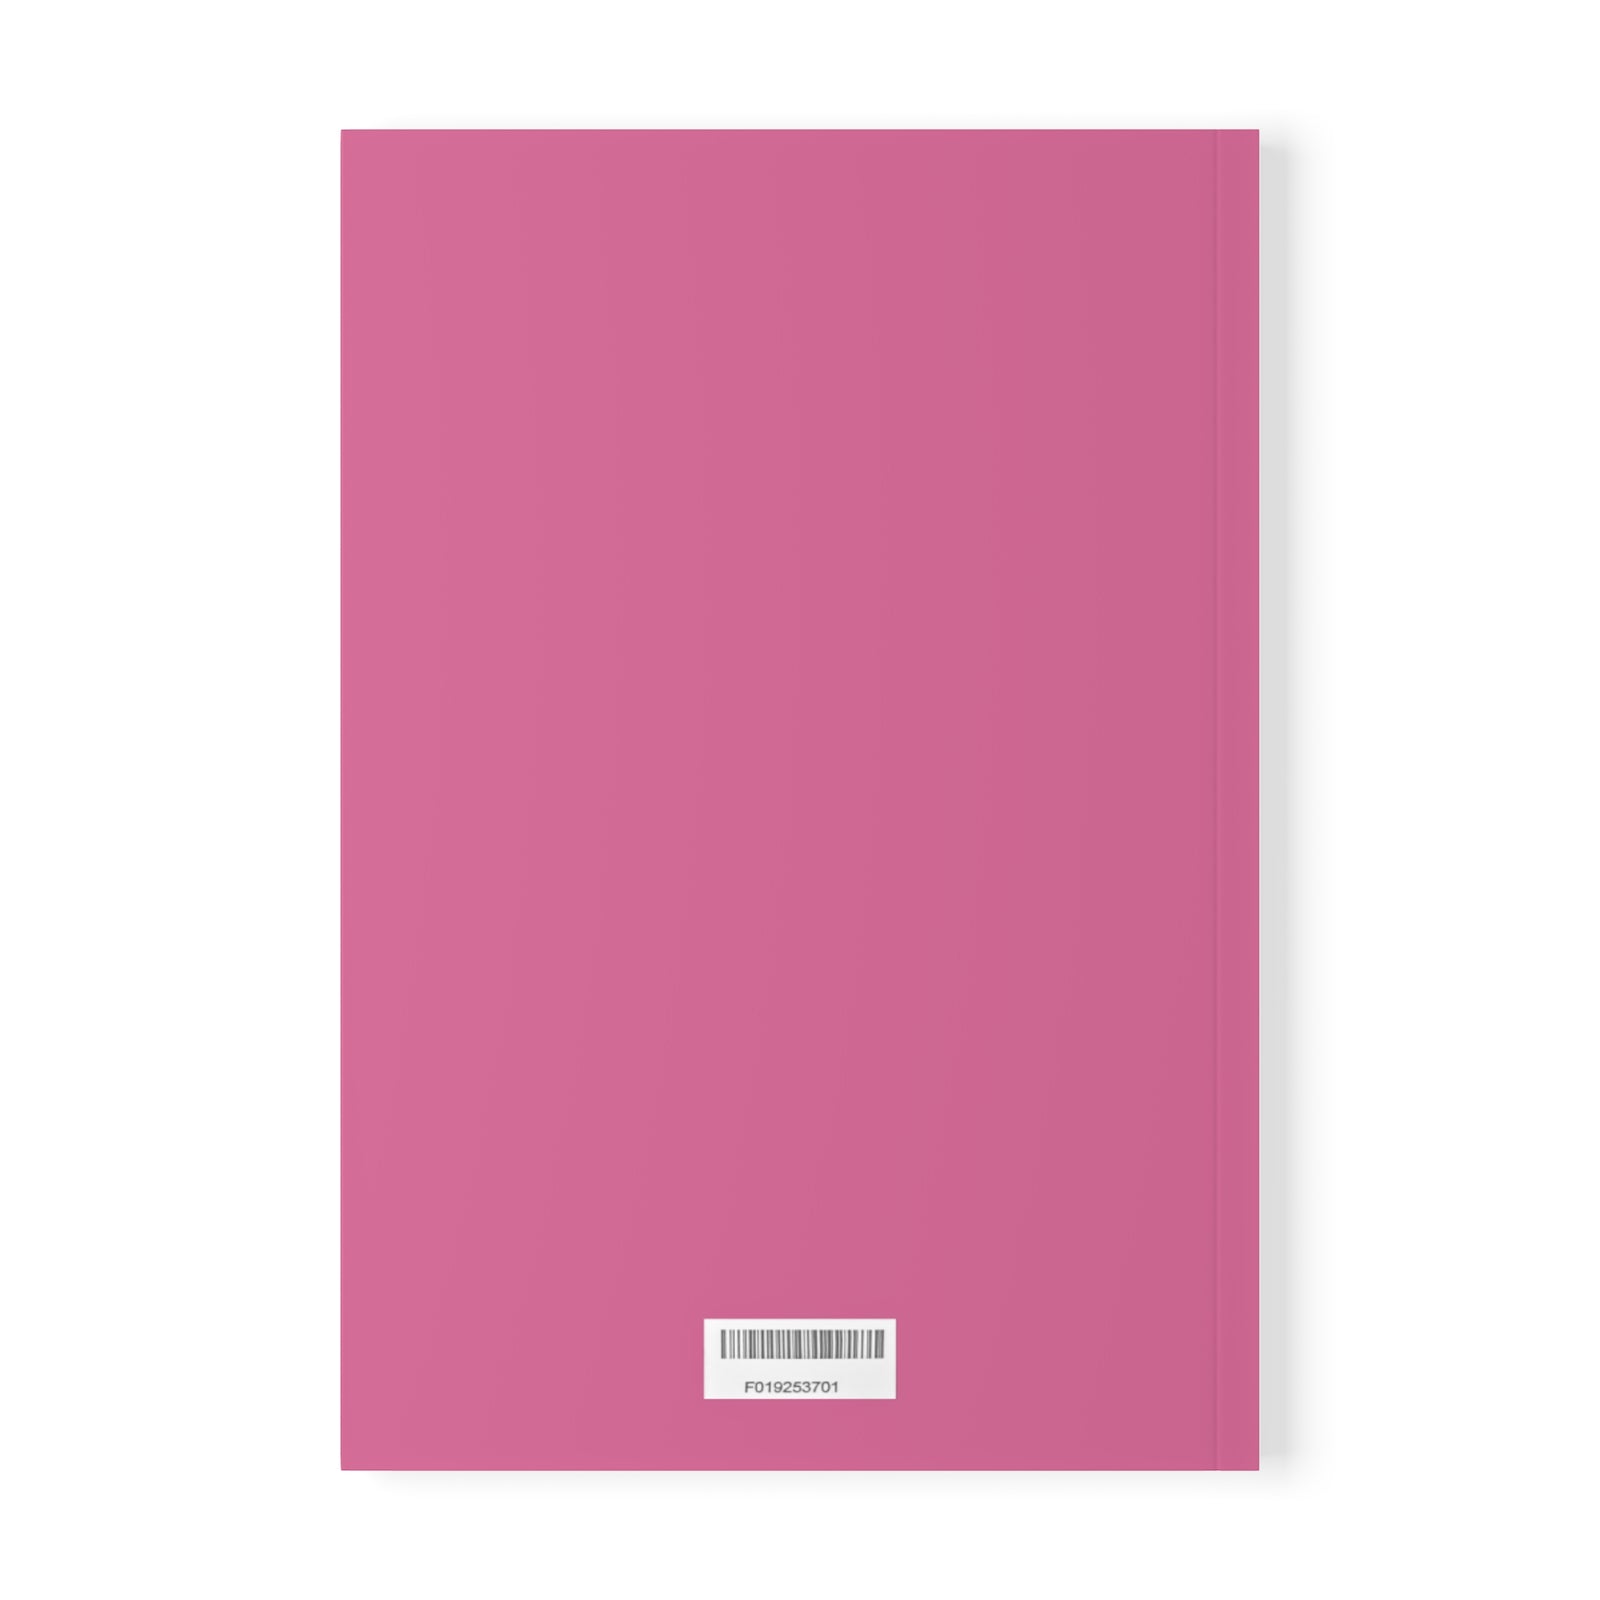 Major Eye Roll Print Pink Notebook